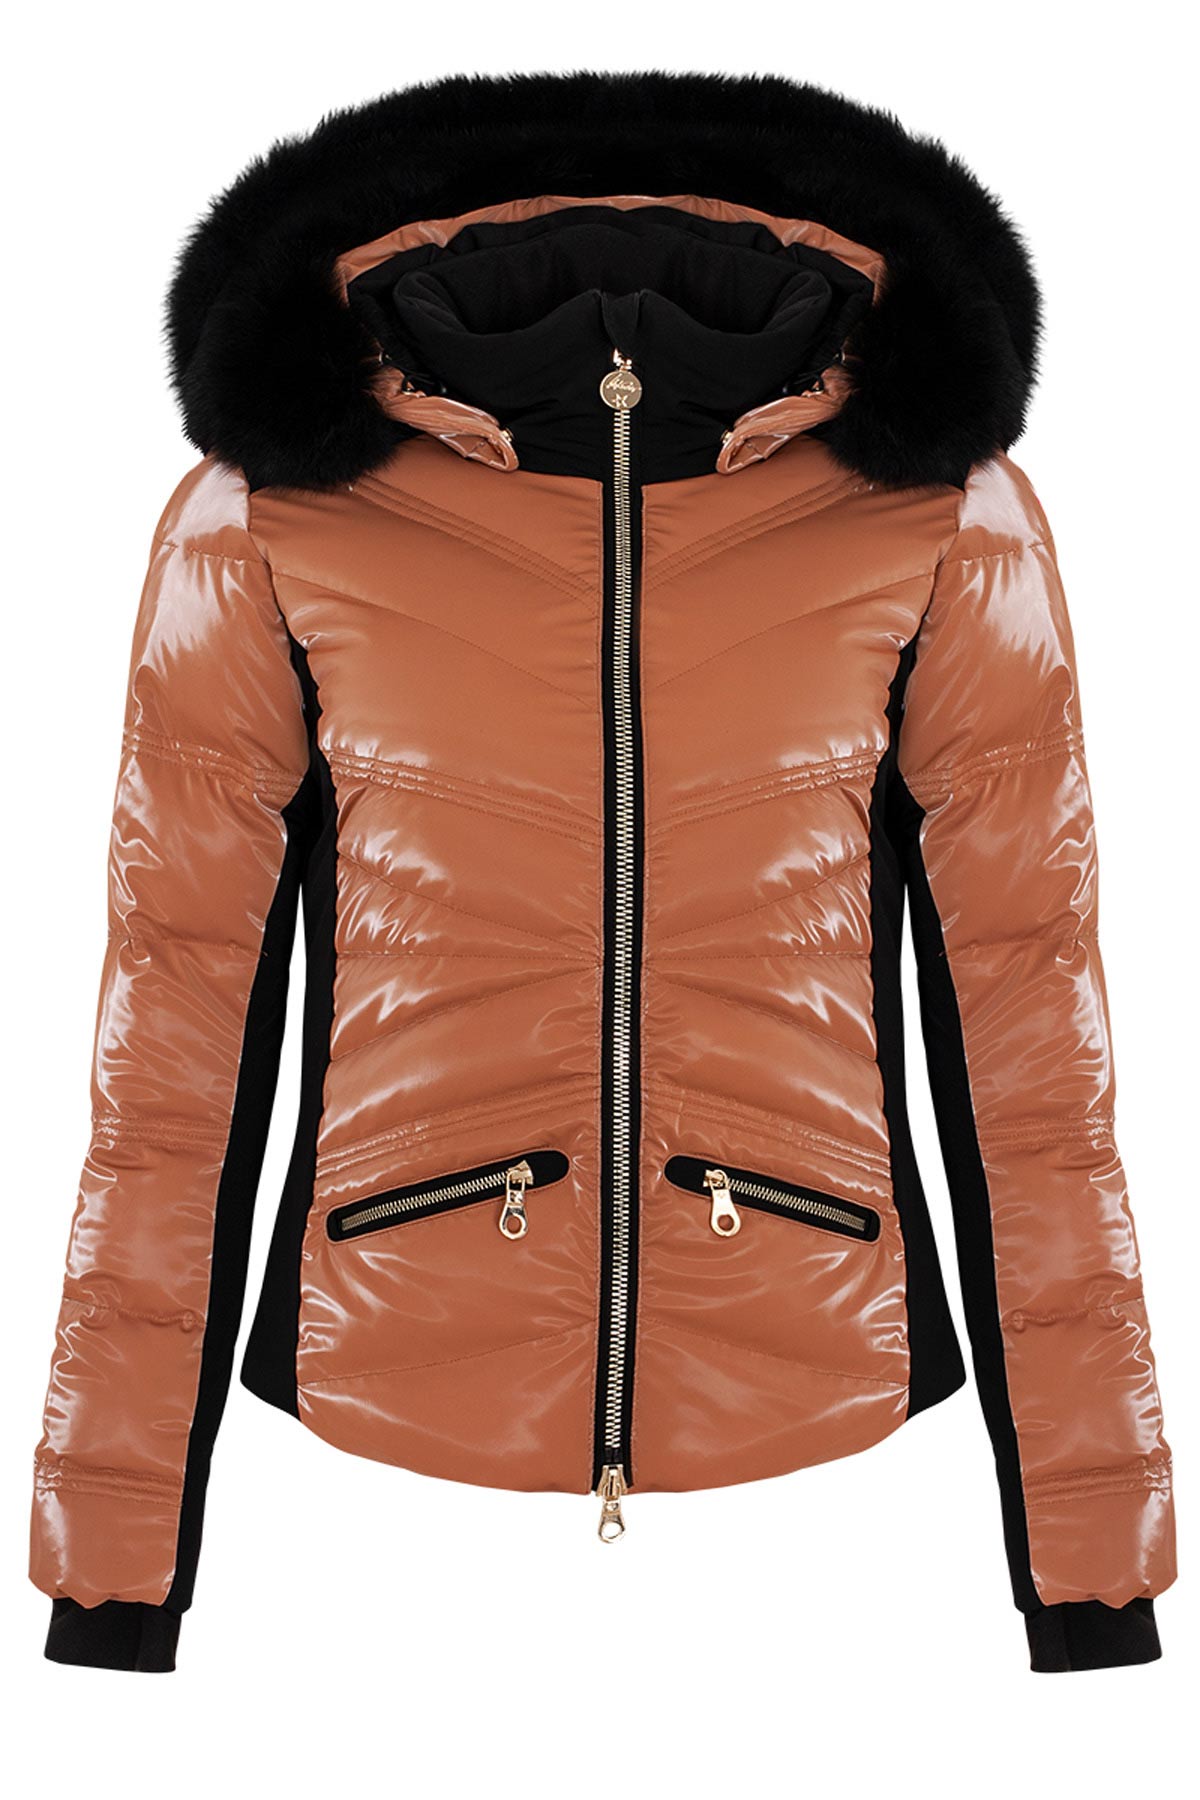 High Society Alyssa Marone Faux Leather Down Ski Jacket with Faux Fur Hood